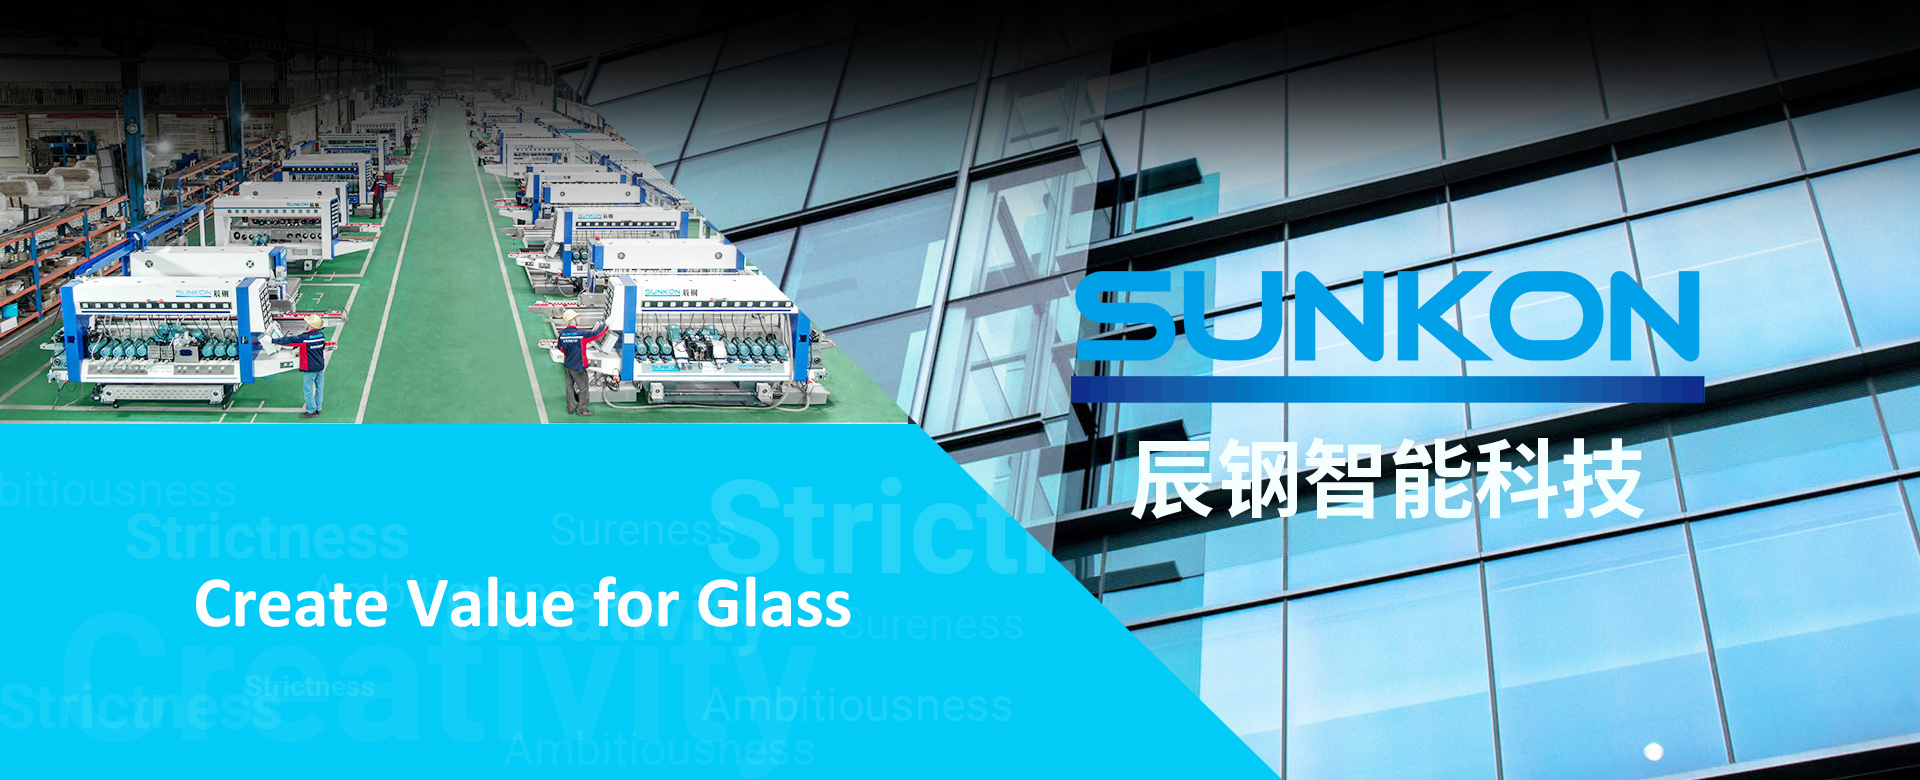 SUNKON glass machine - banner